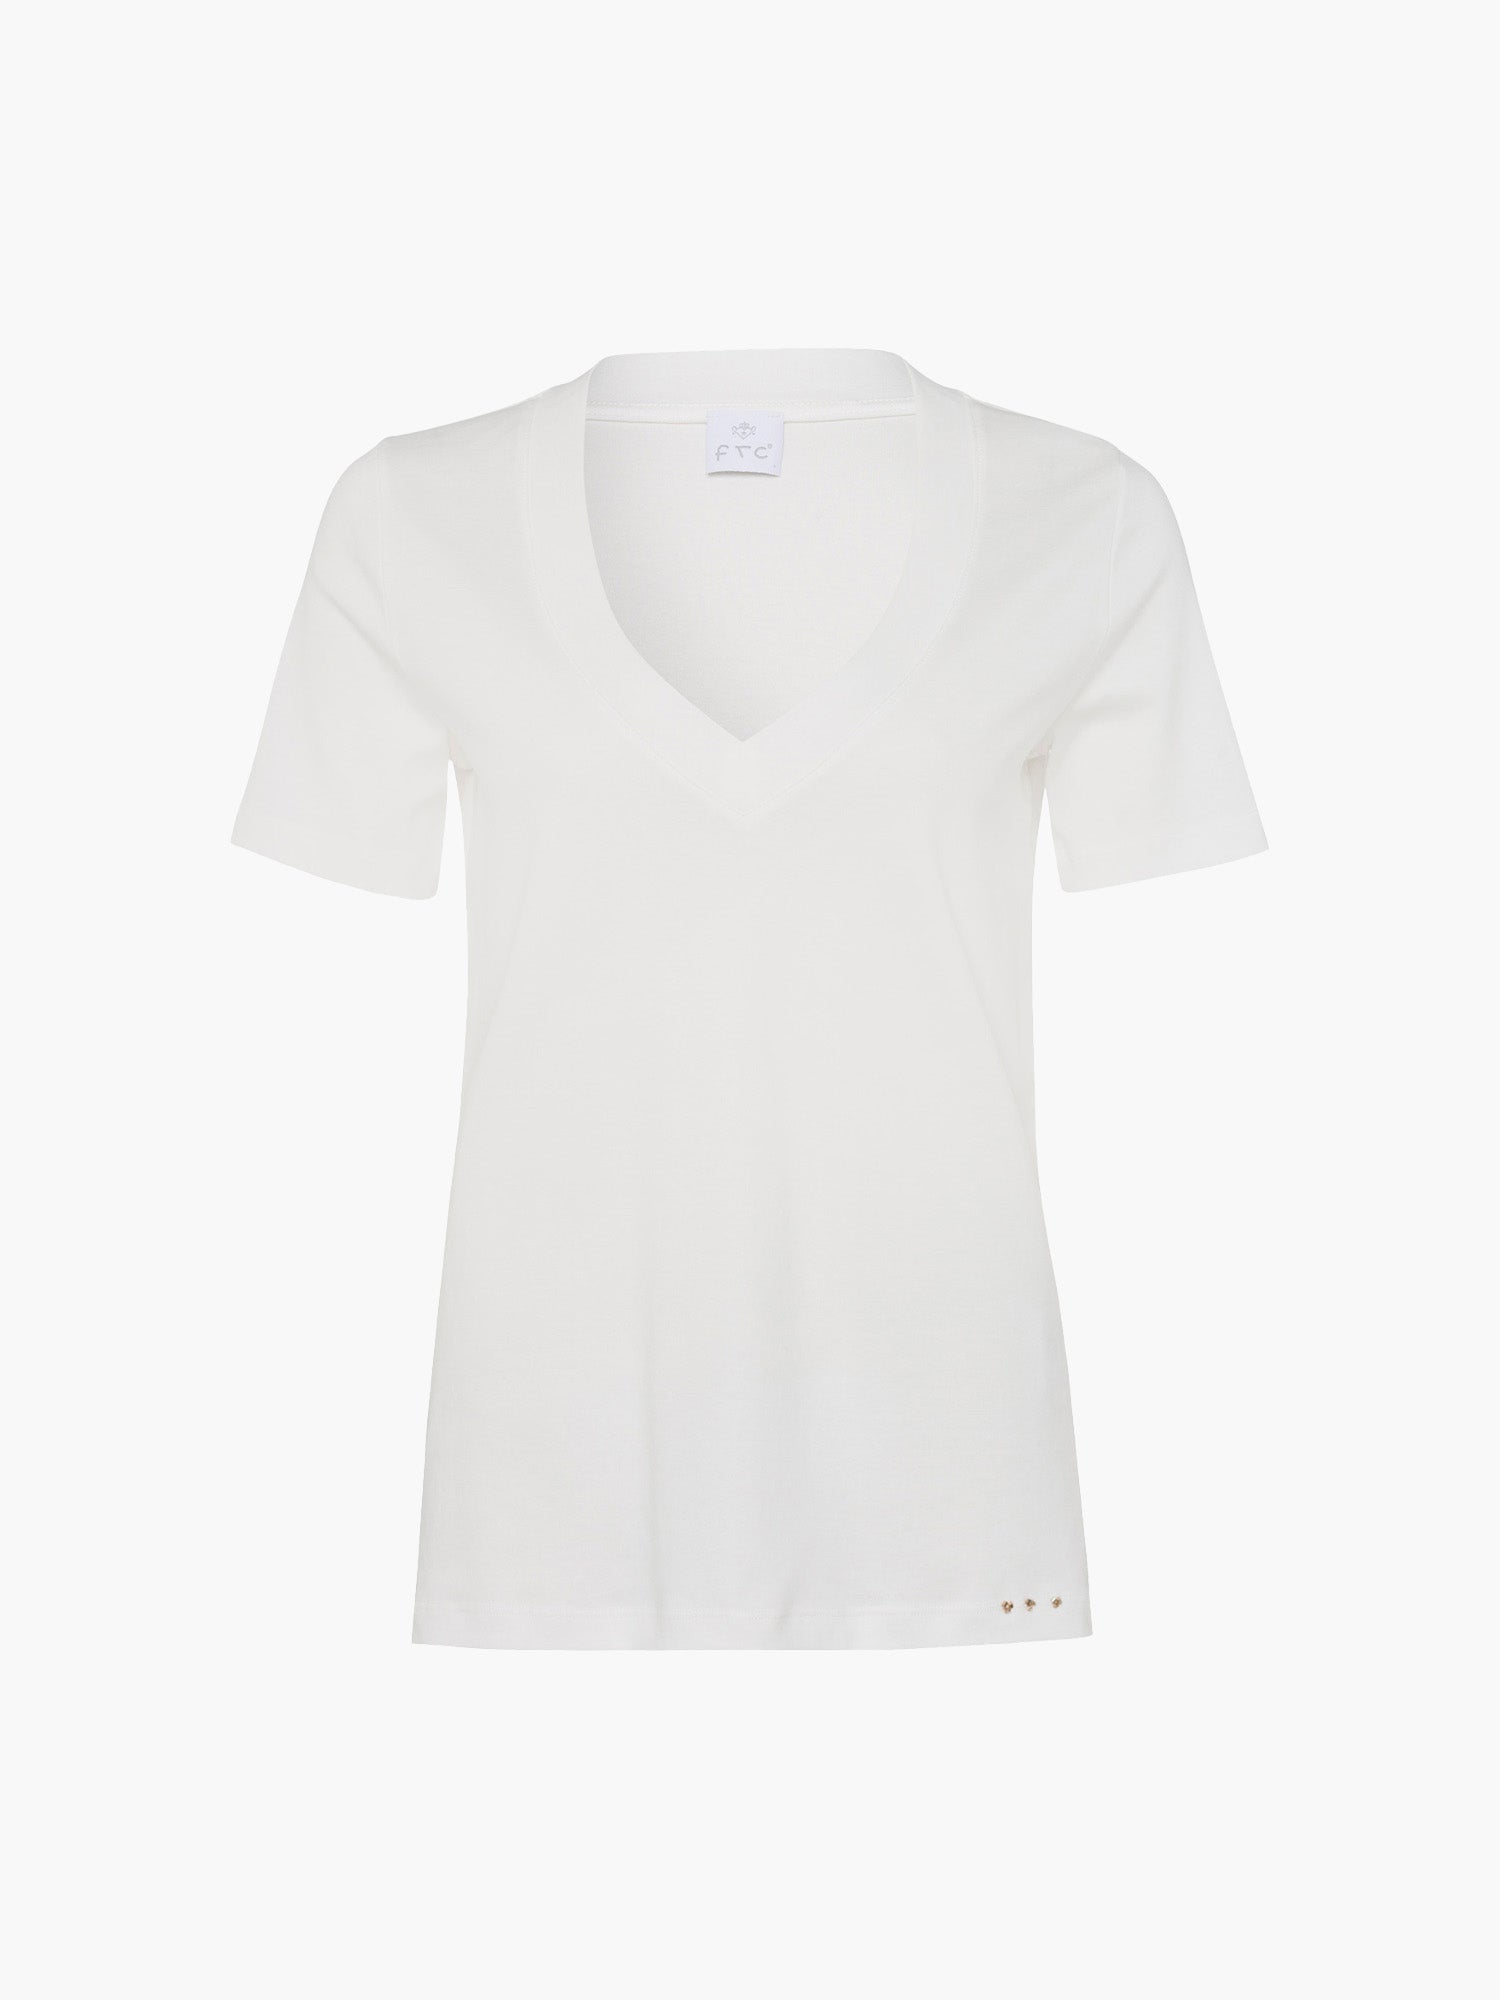 FTC-CASHMERE-OUTLET-SALE-T-Shirt VN 1/2 100% Organic Cotton-Shirts-S-Pristine White-MUNICH_VILLAGE-by-ARCHIVIST